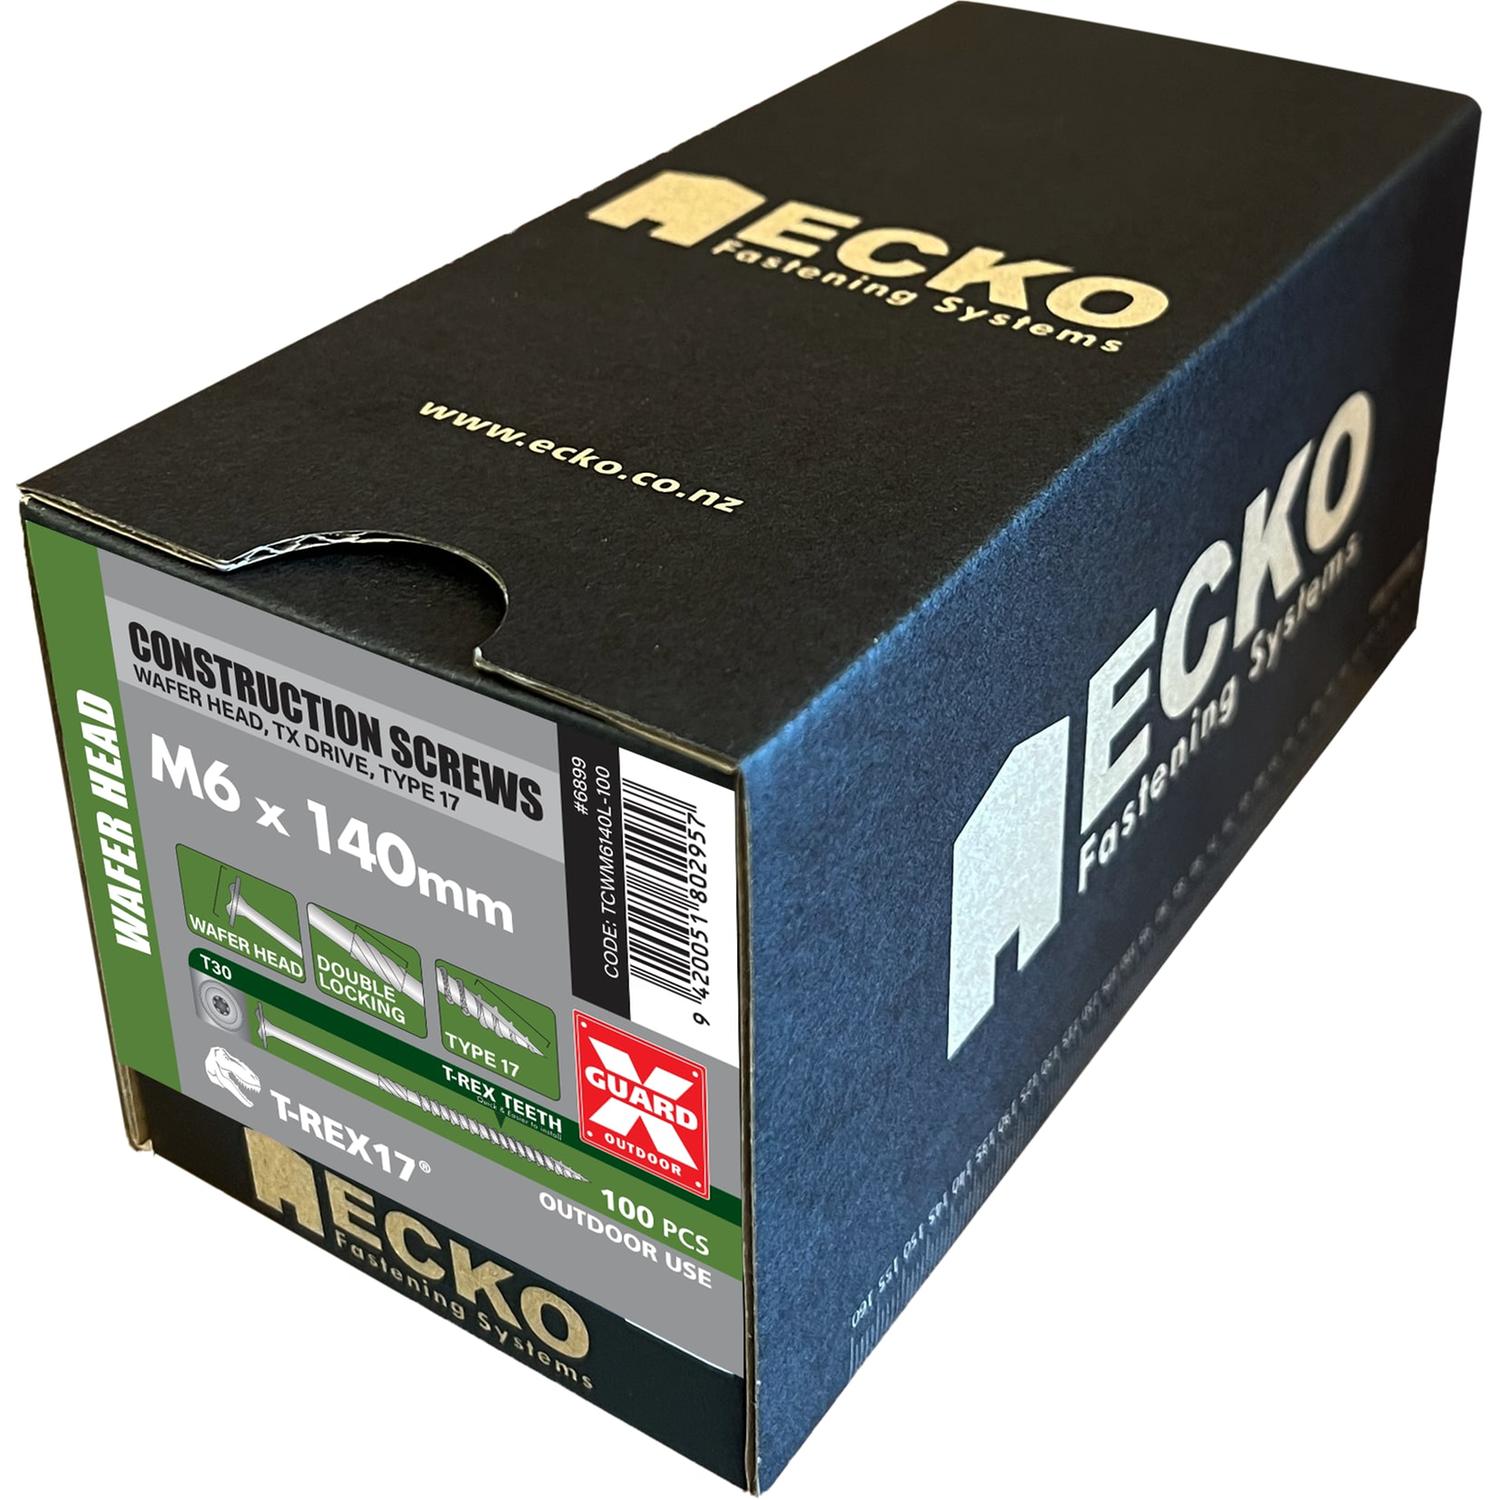 Ecko T-Rex17 Wafer Head Construction Screws M6 X 140Mm (800 Pack)